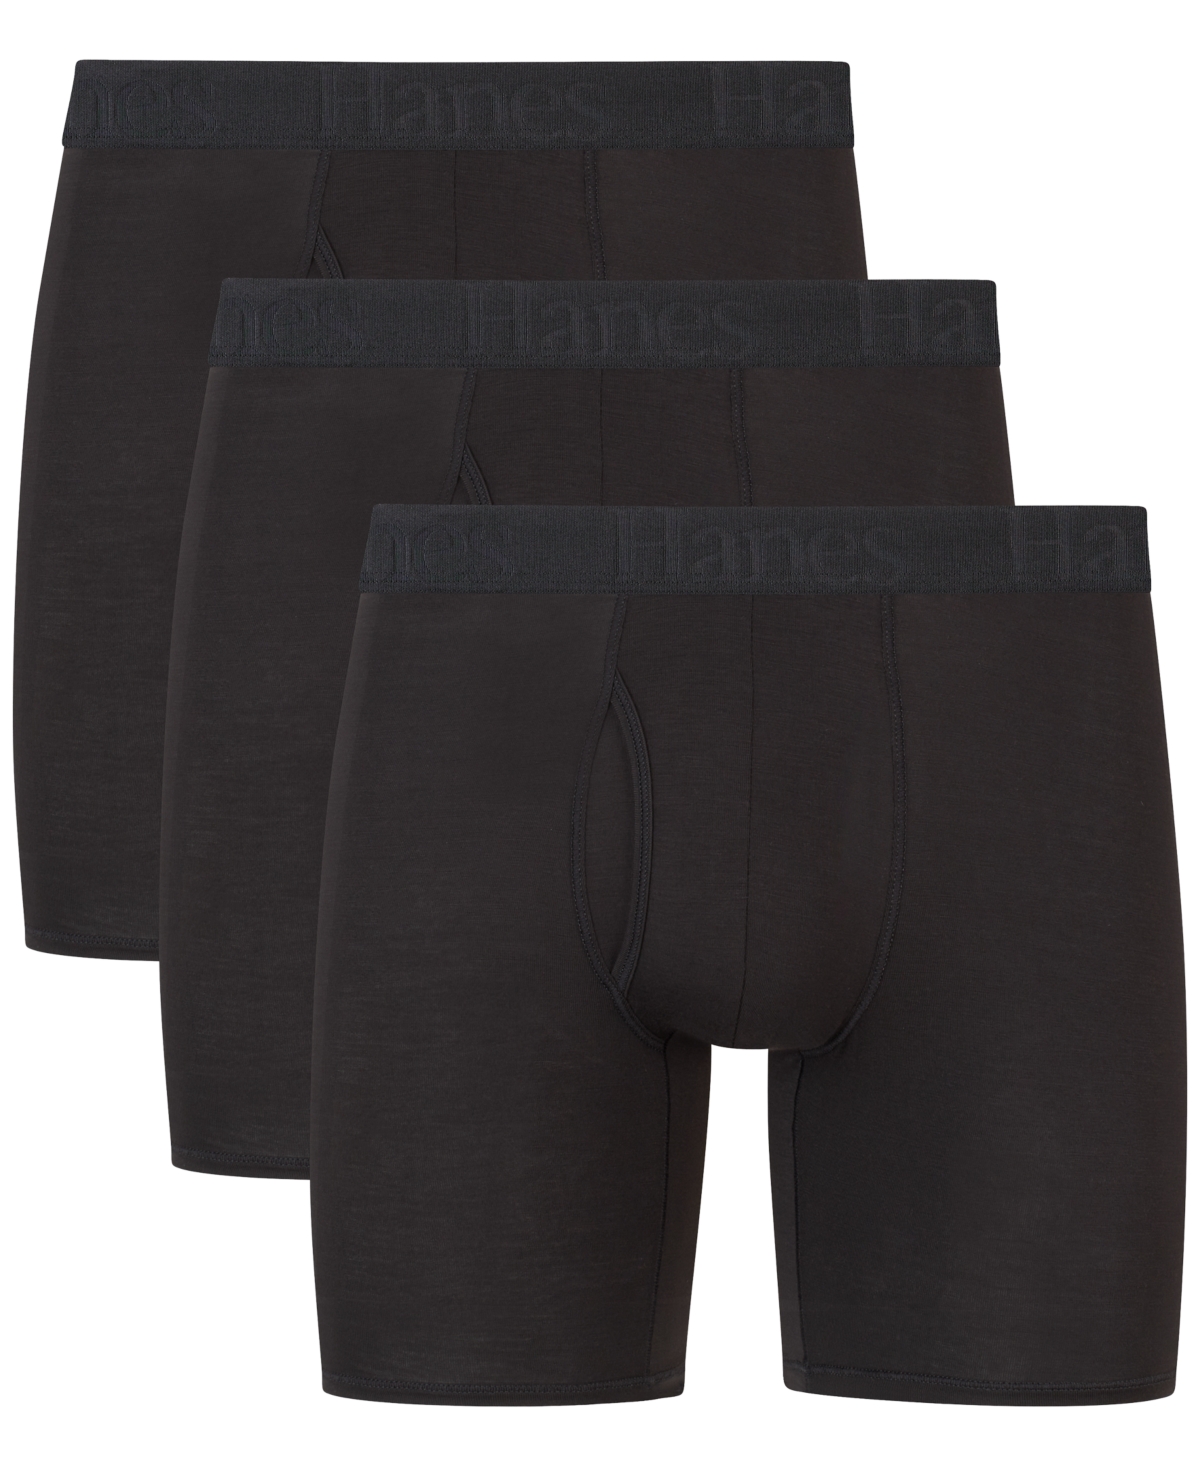 Hanes Men's 3-pk. Modern-fit Stretch Moisture-wicking Boxer Briefs In Assorted